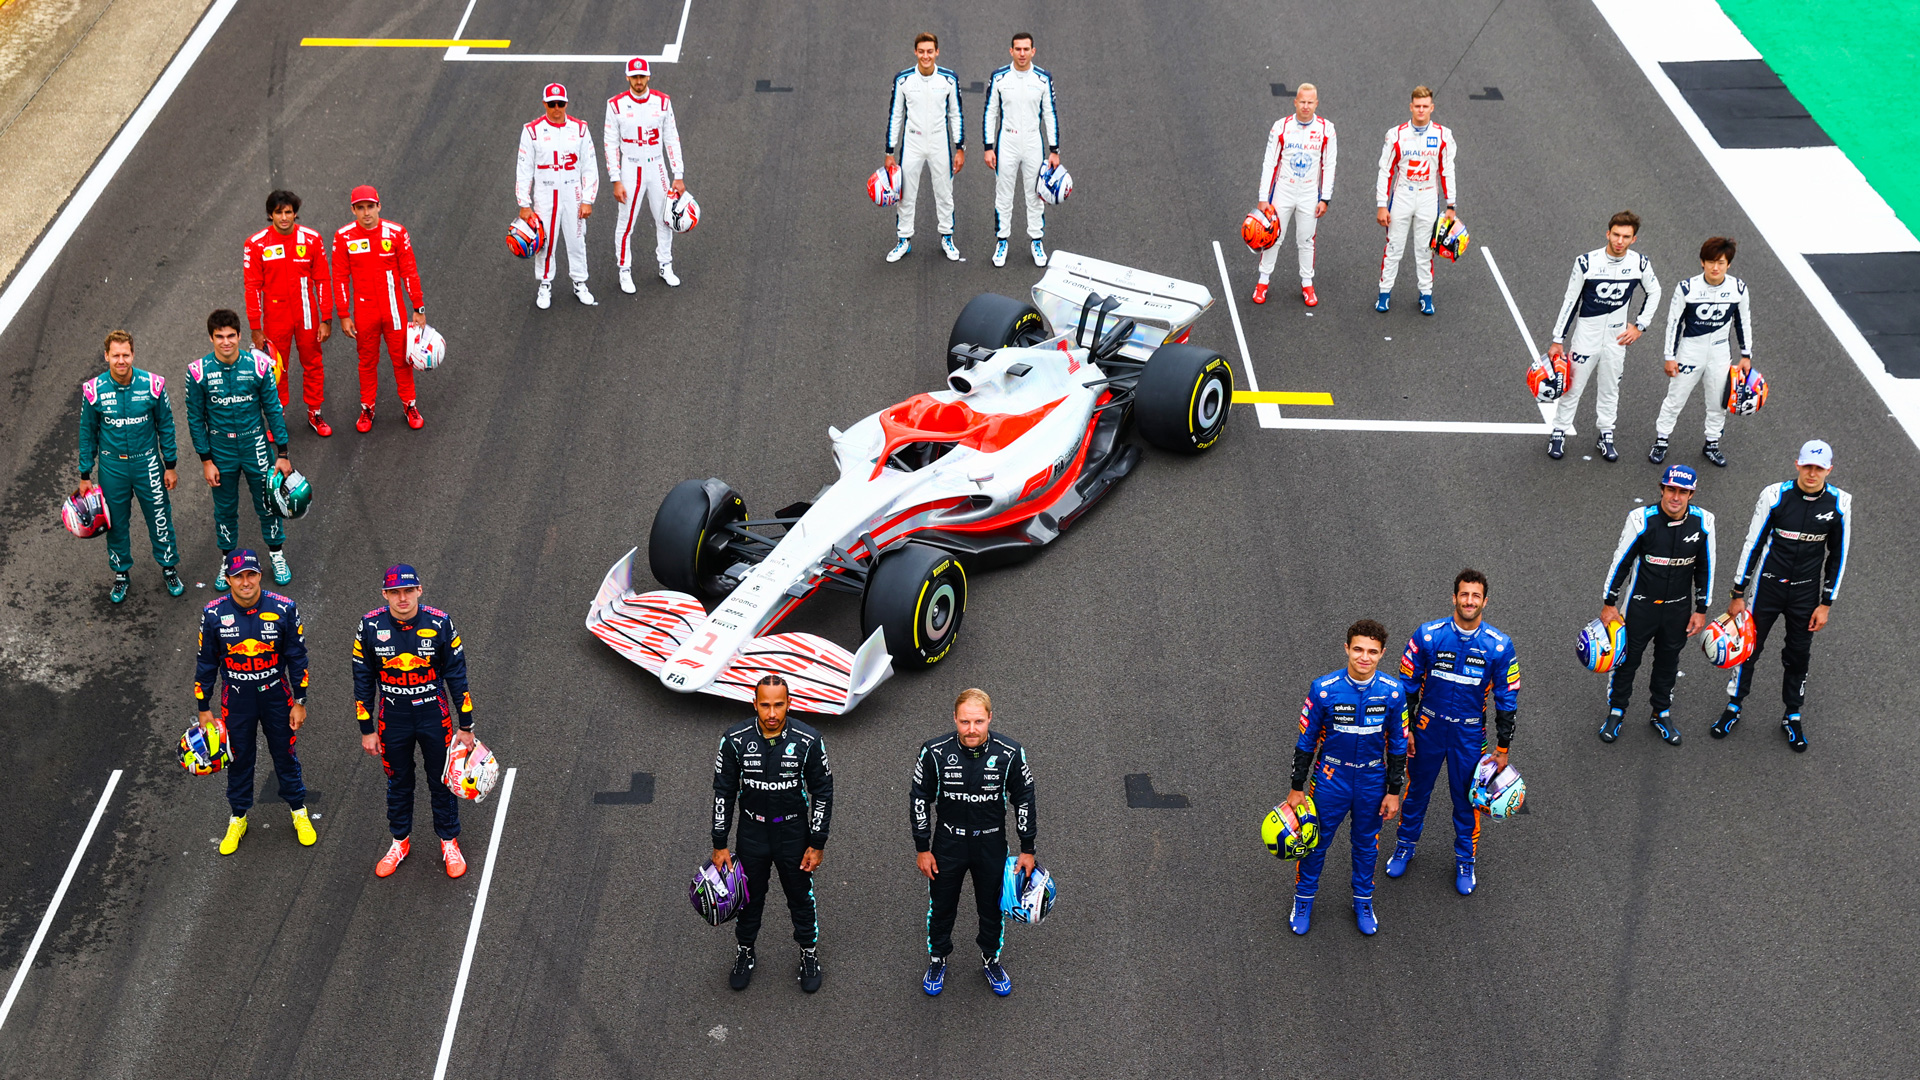 F1 Car Wallpapers